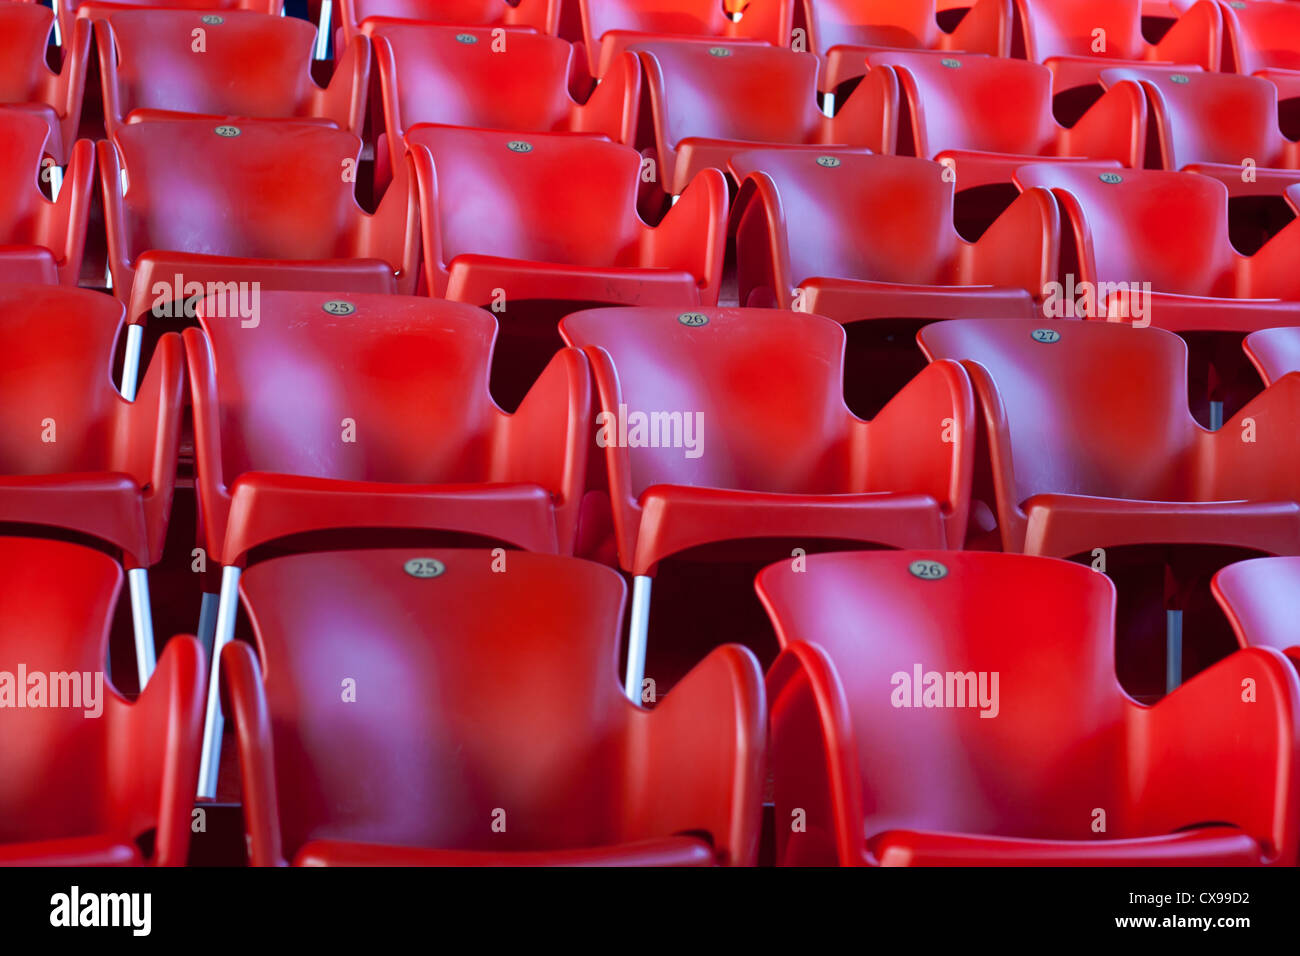 Red stadium seats Stock Photo